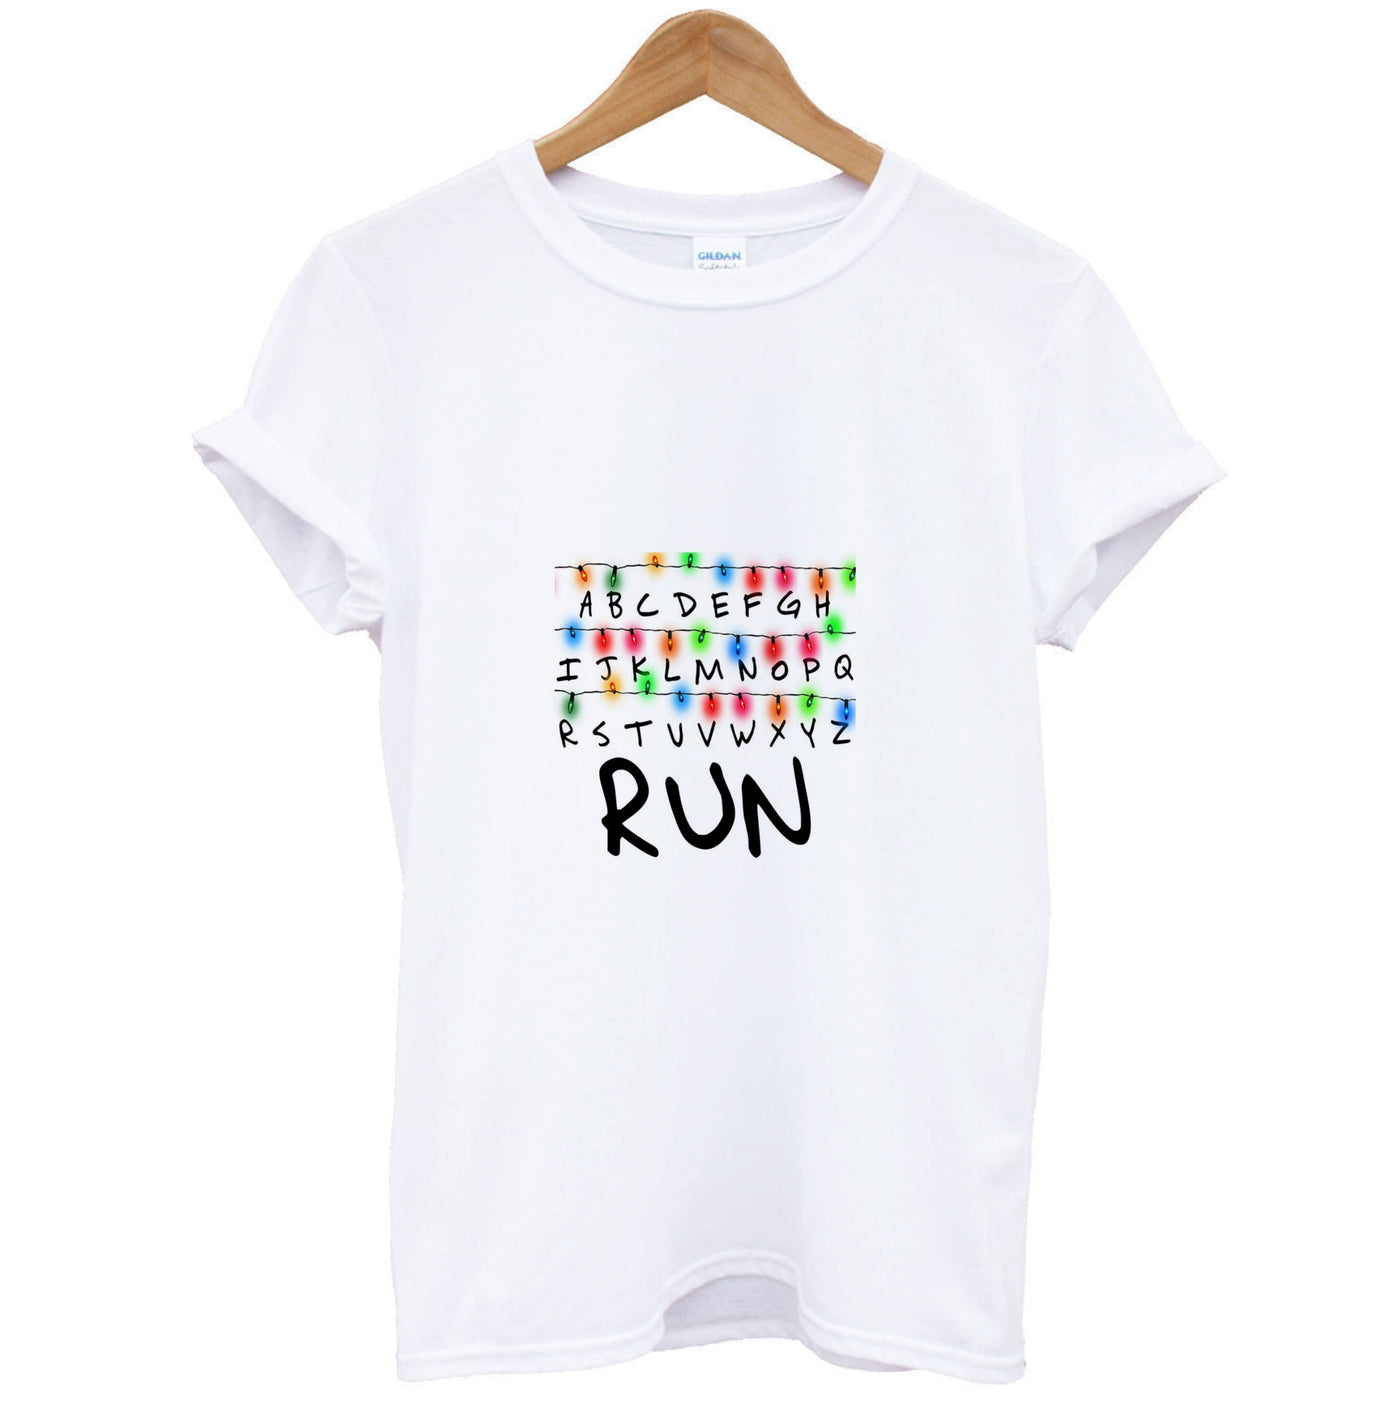 Run - Stranger Things T-Shirt